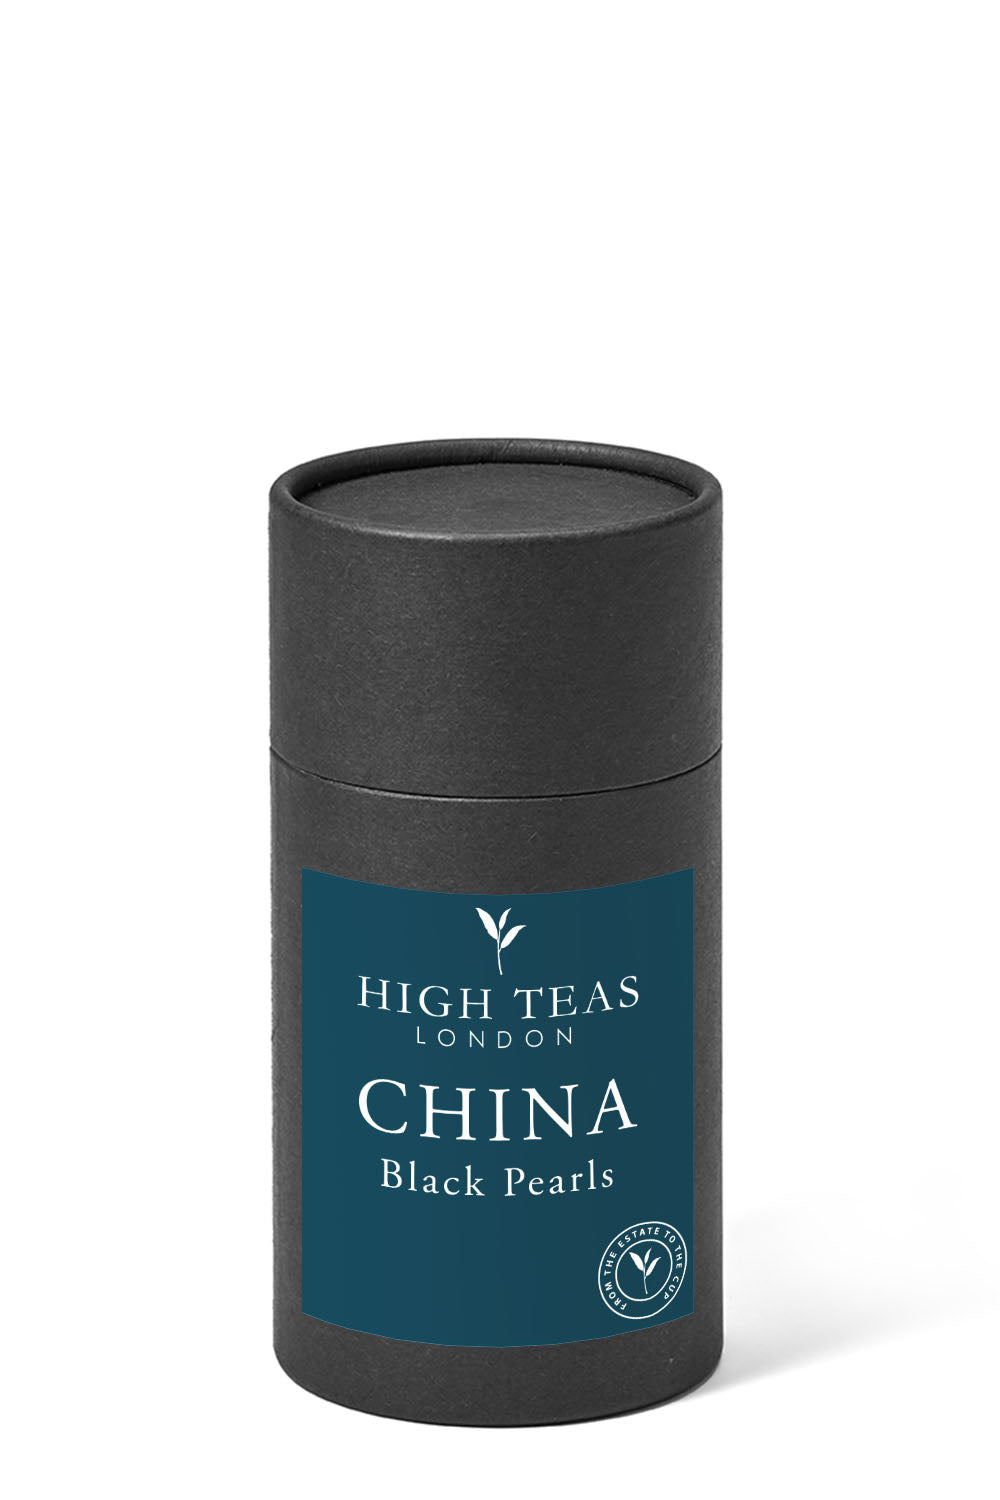 China - Black Pearls aka Black Gunpowder-60g gift-Loose Leaf Tea-High Teas